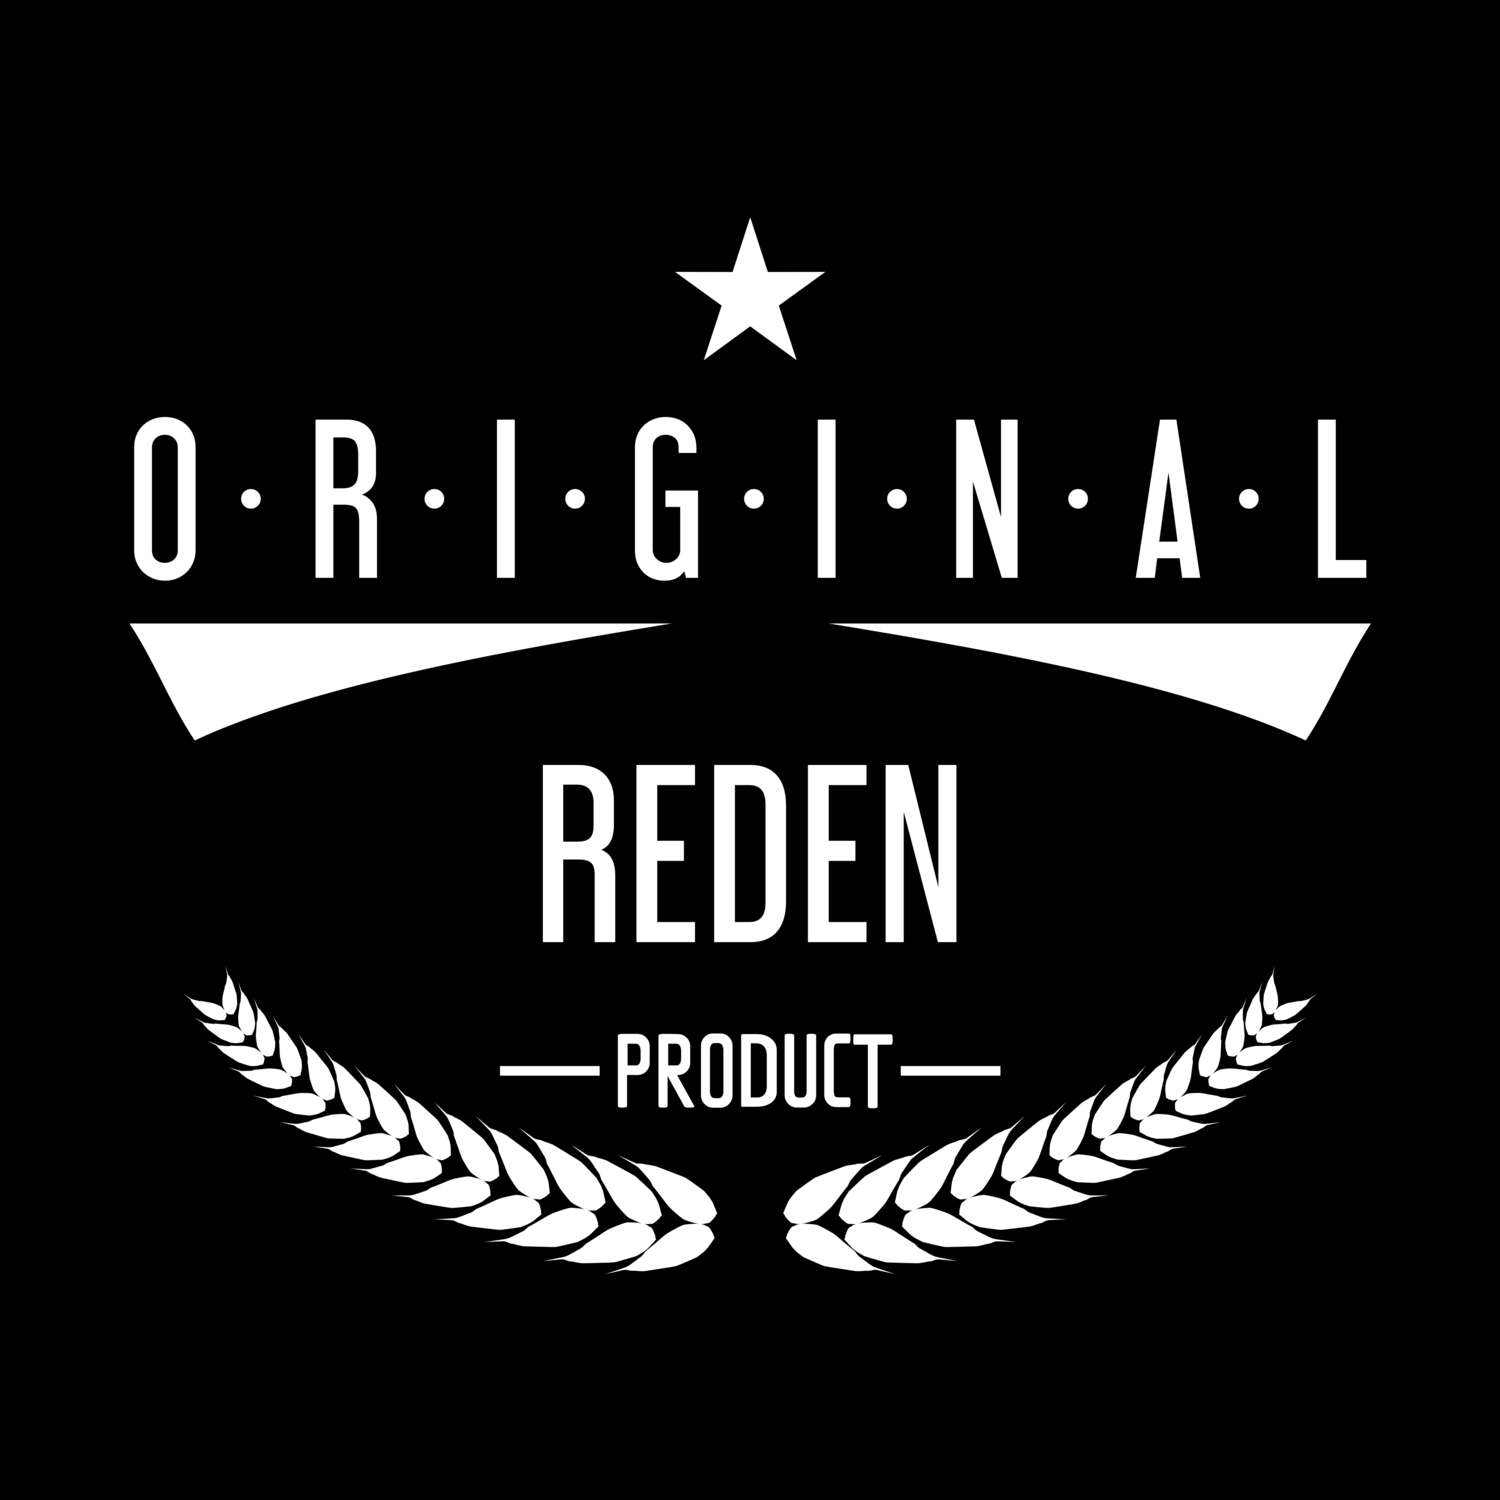 Reden T-Shirt »Original Product«